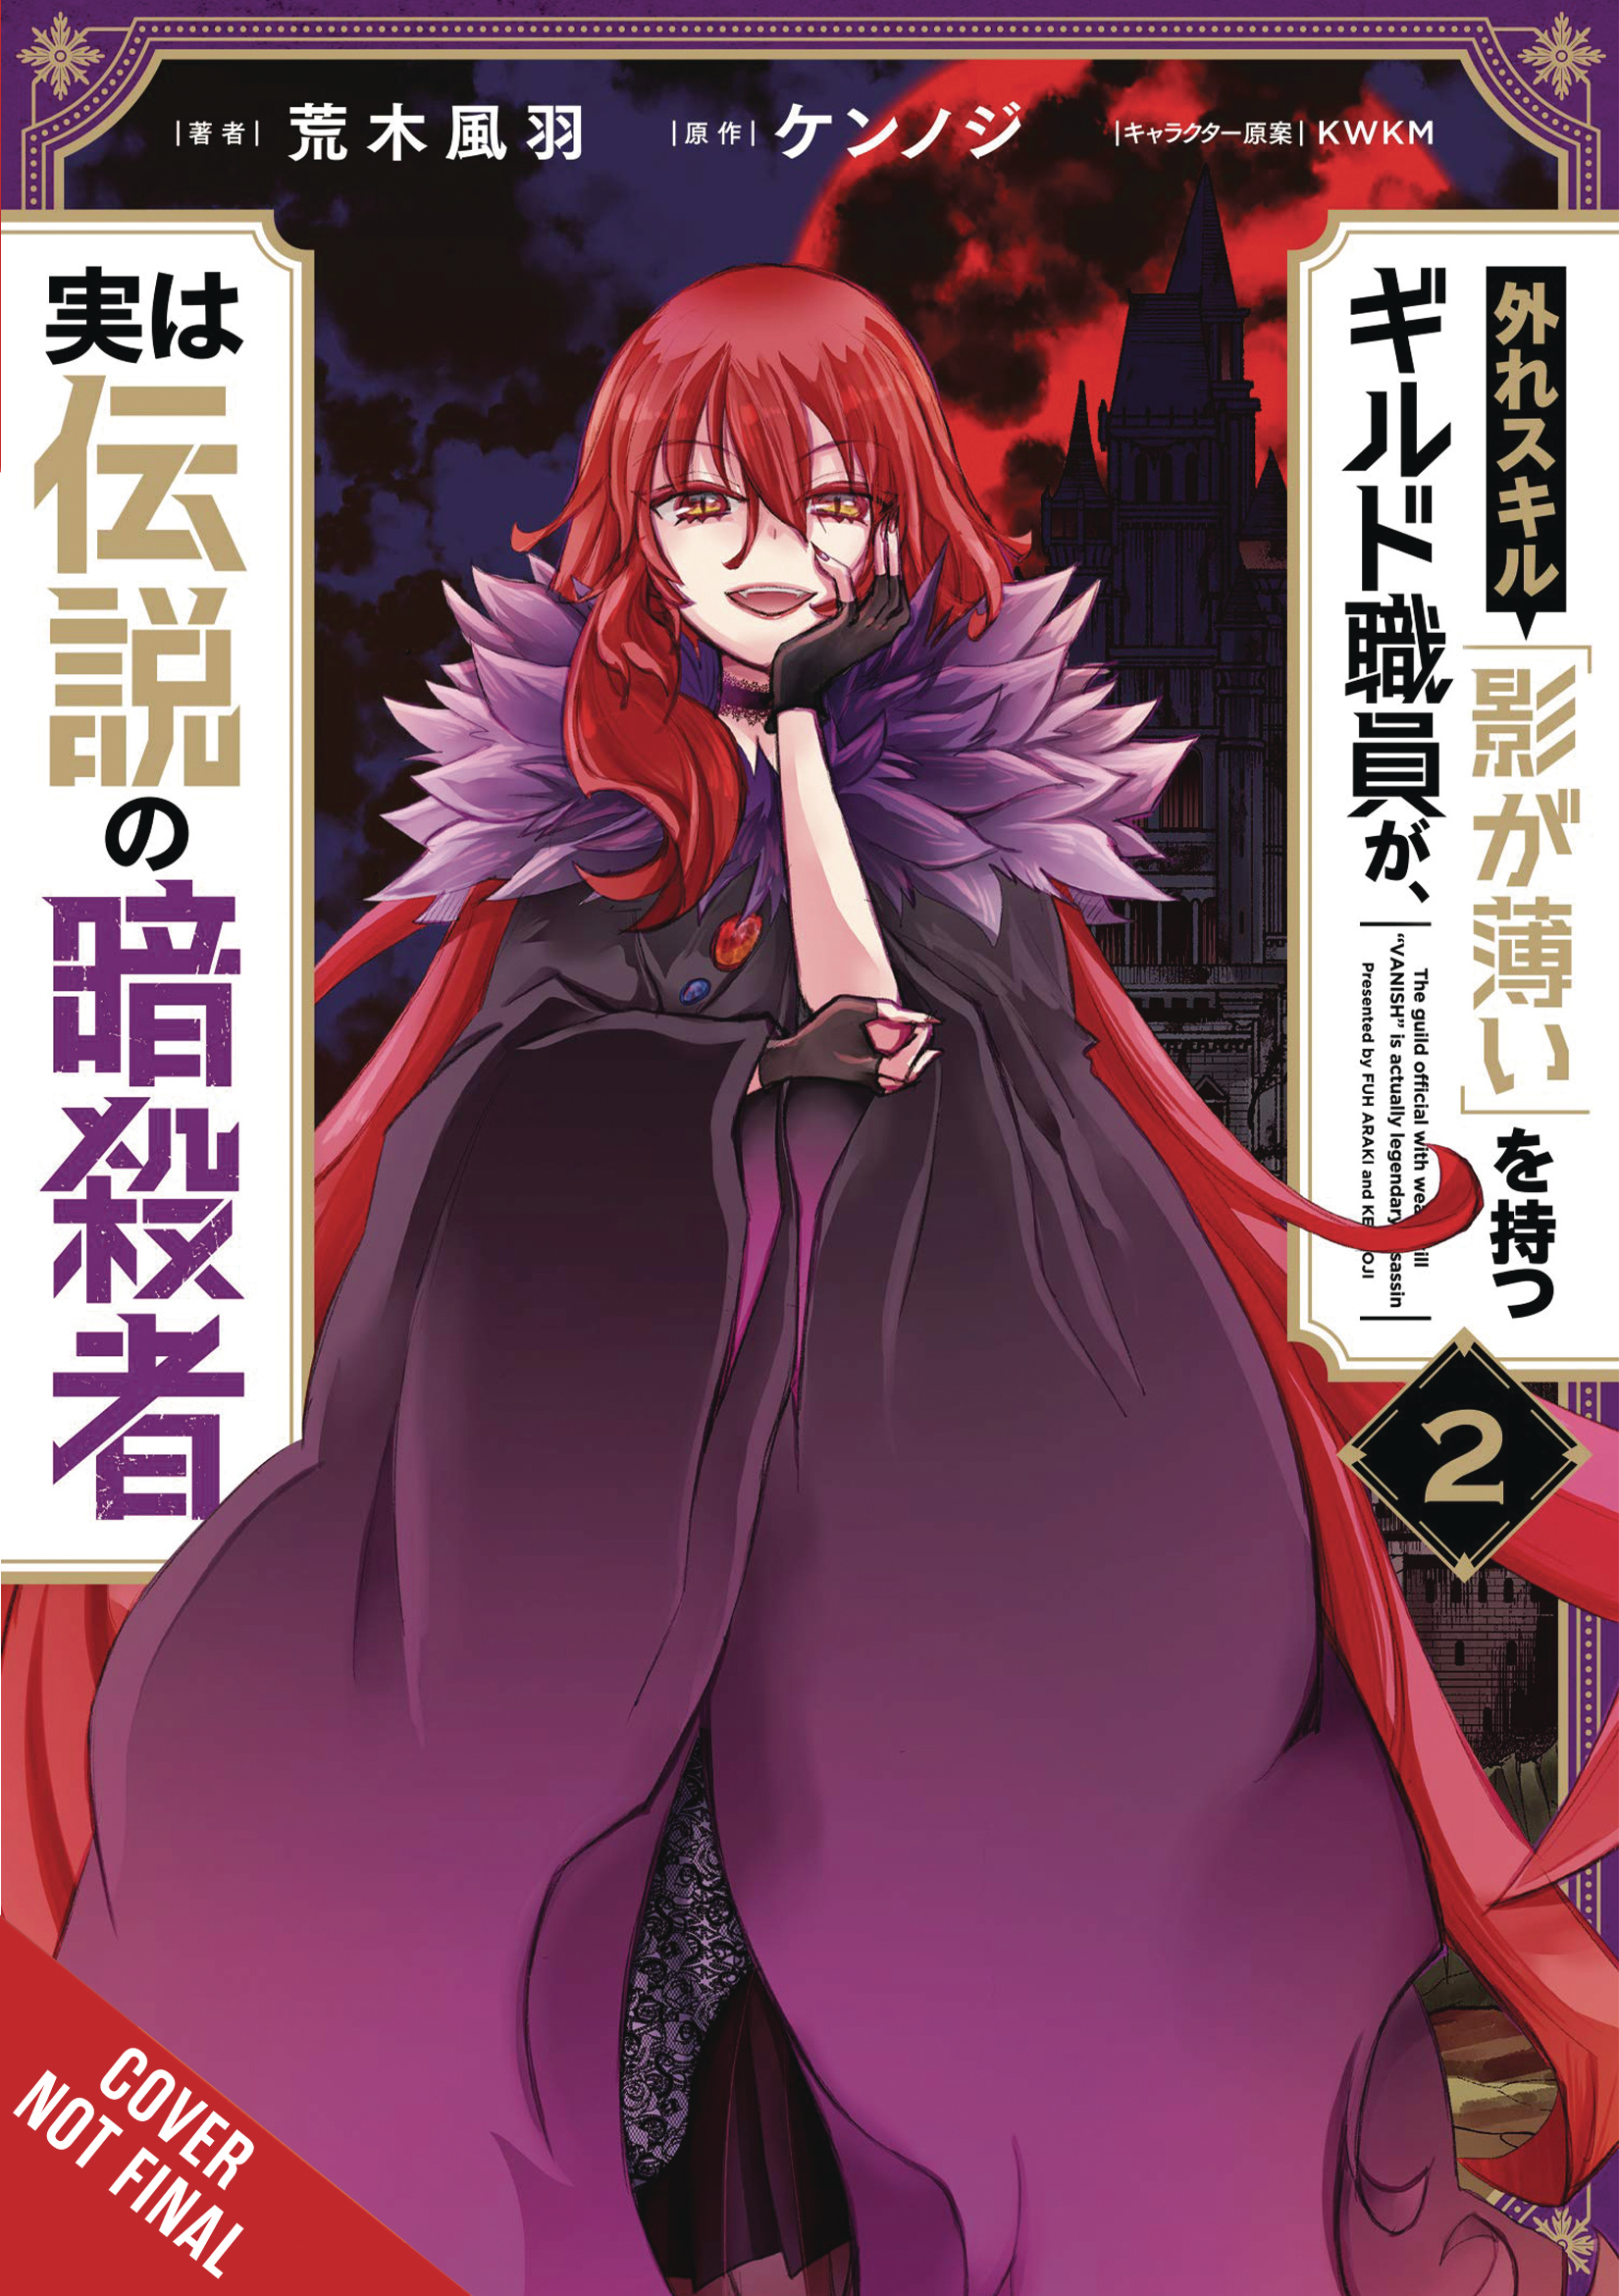 Hazure Skill Legendary Assassin Manga Volume 2 (Mature)